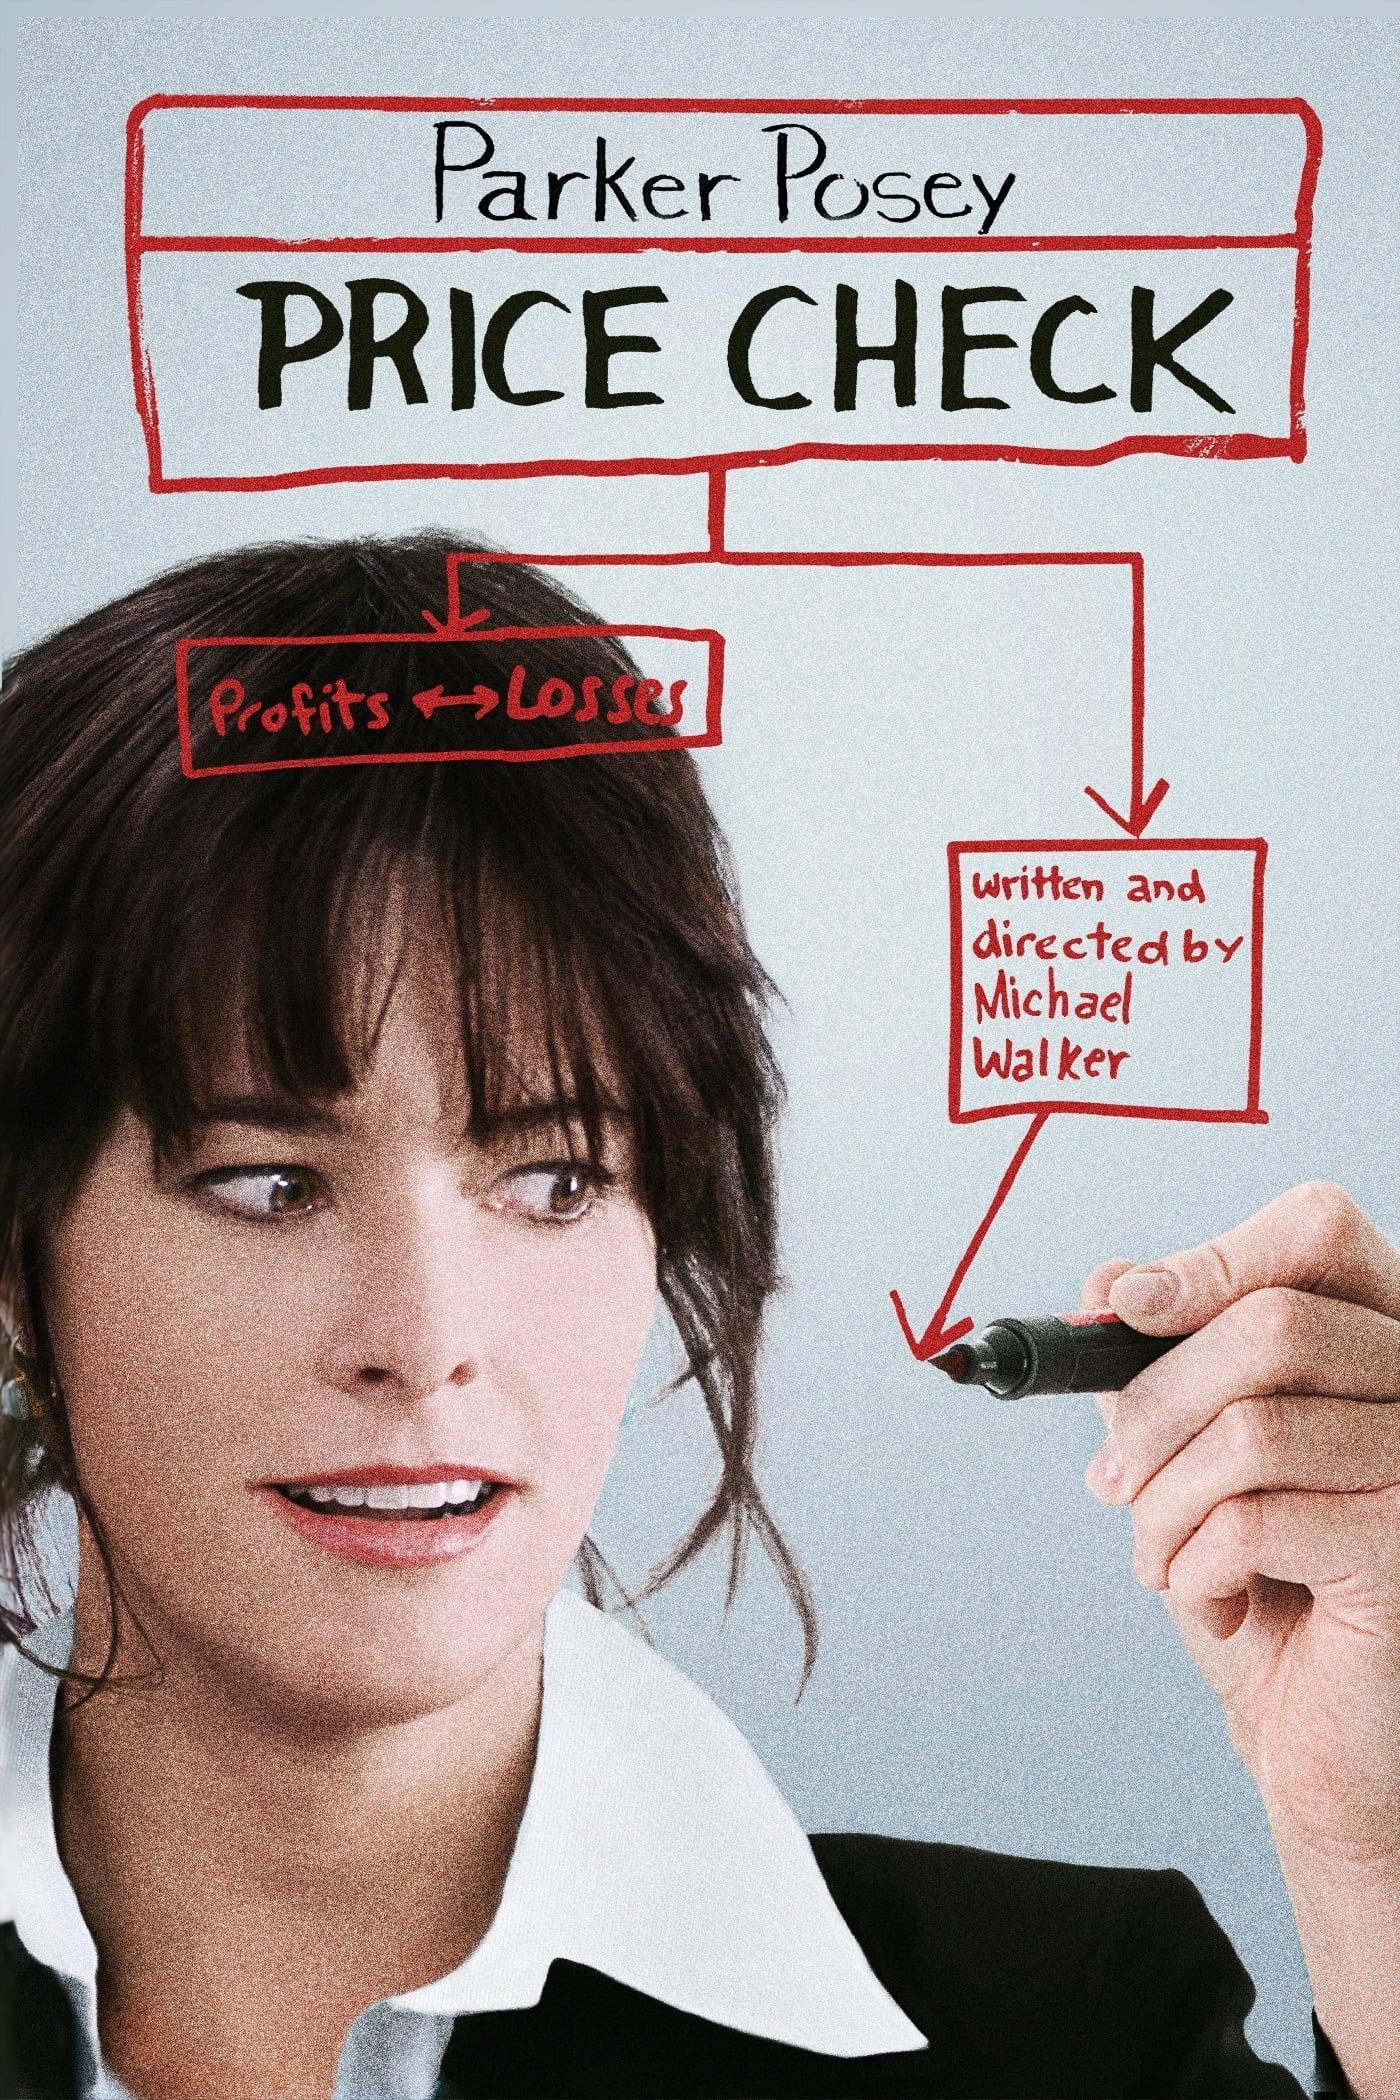 Price Check poster